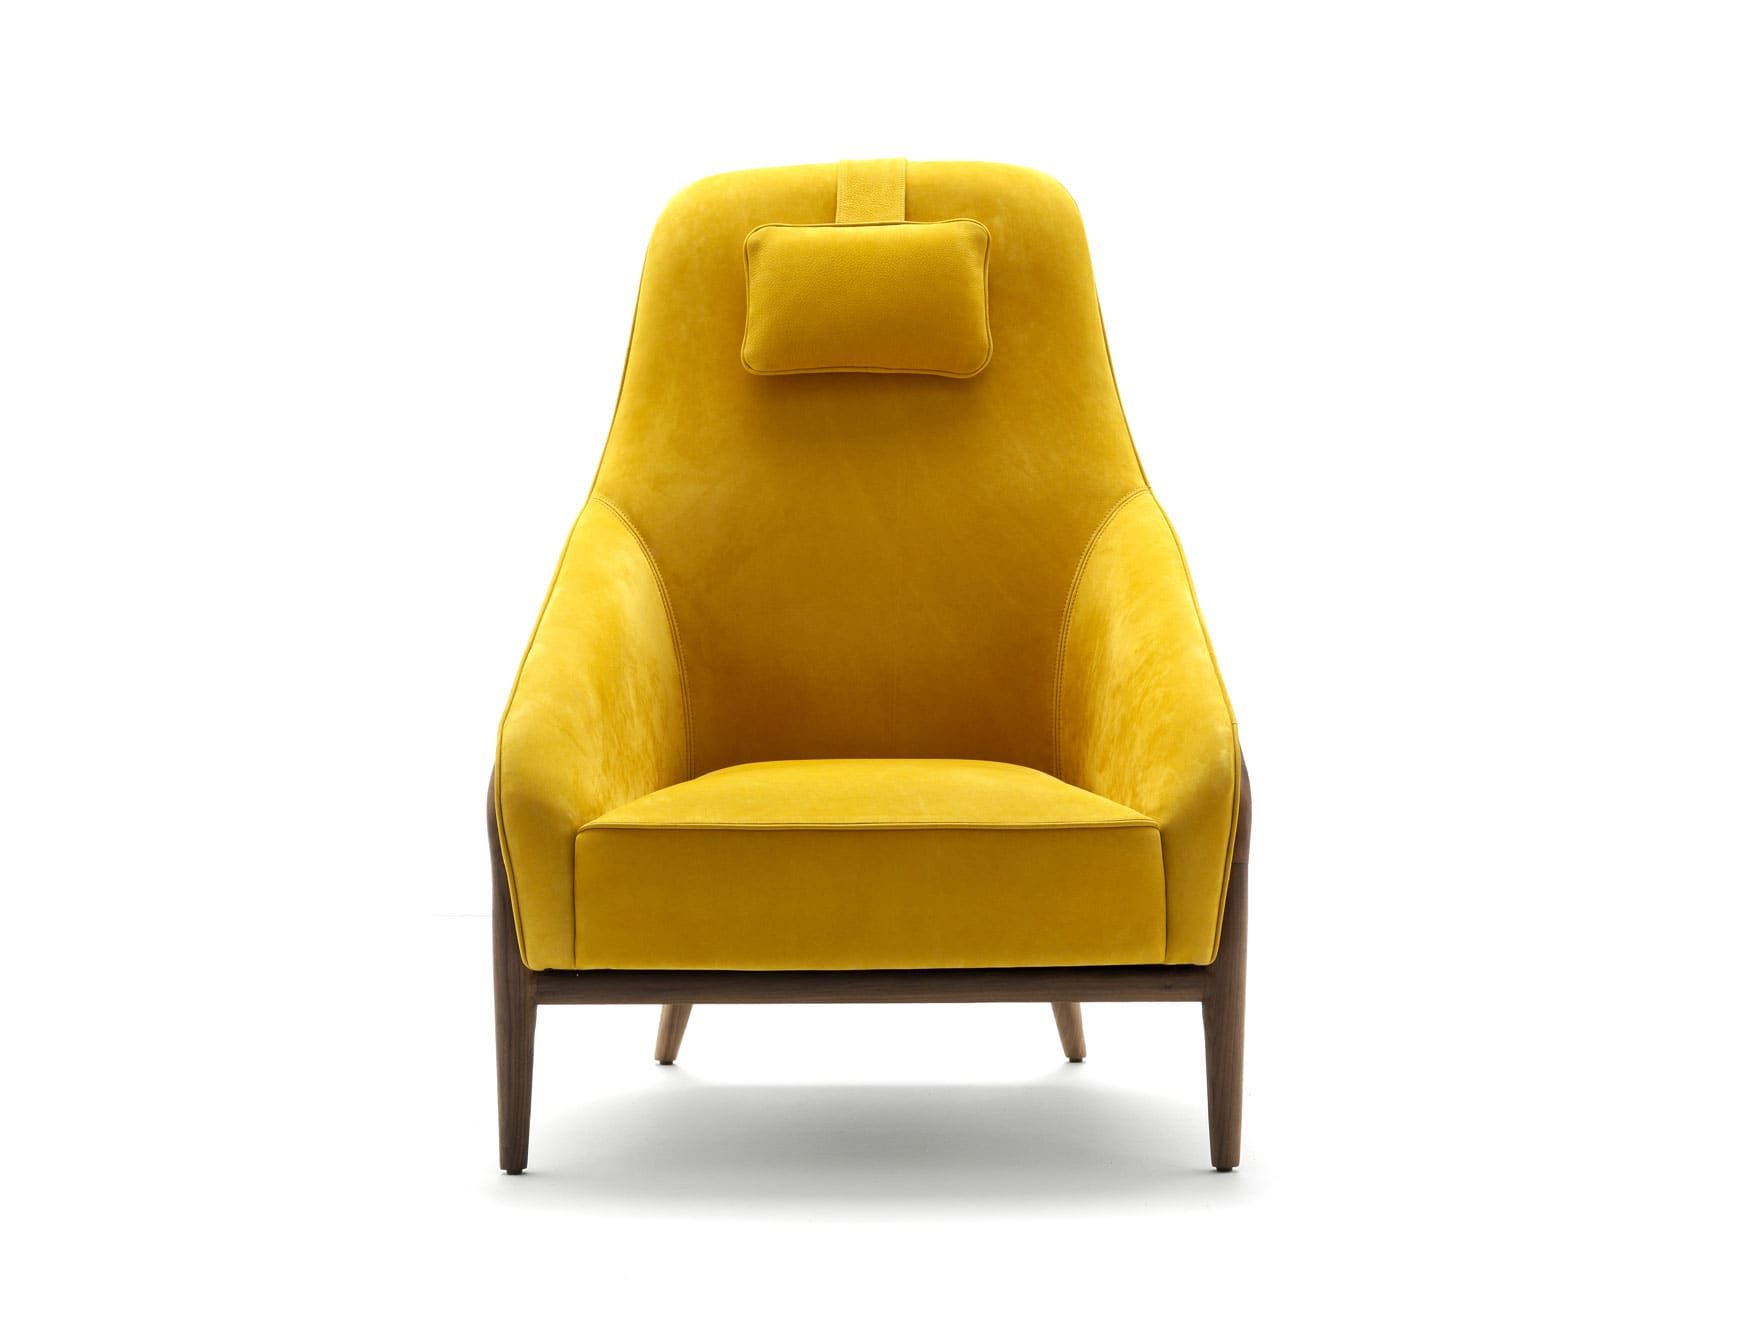 Adele modern Italian sofa chair with yellow leather